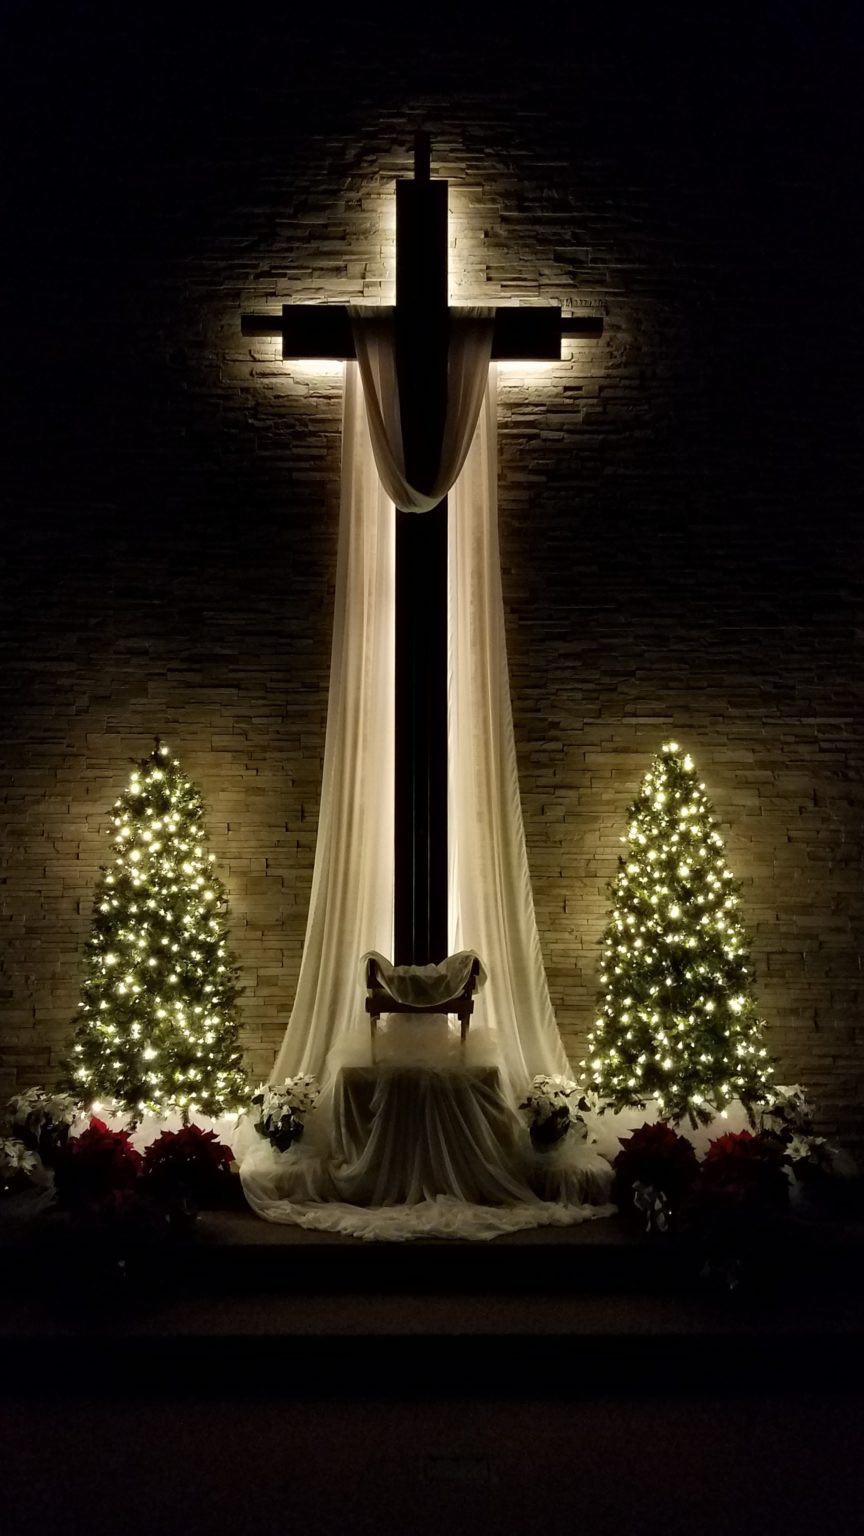 manger and illuminated cross